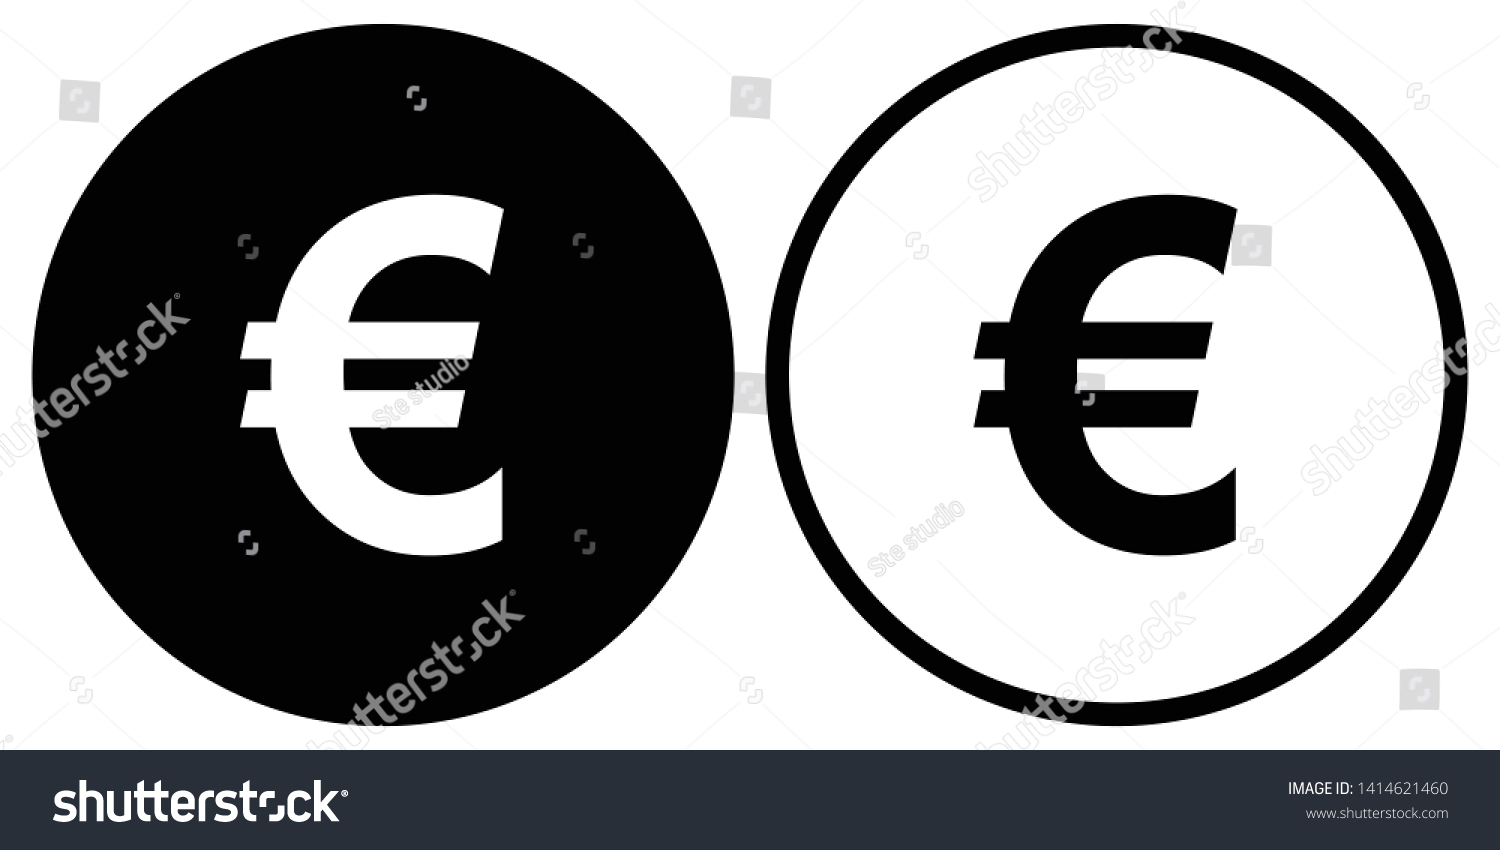 euro icon black vector illustration stock vector royalty free 1414621460 shutterstock